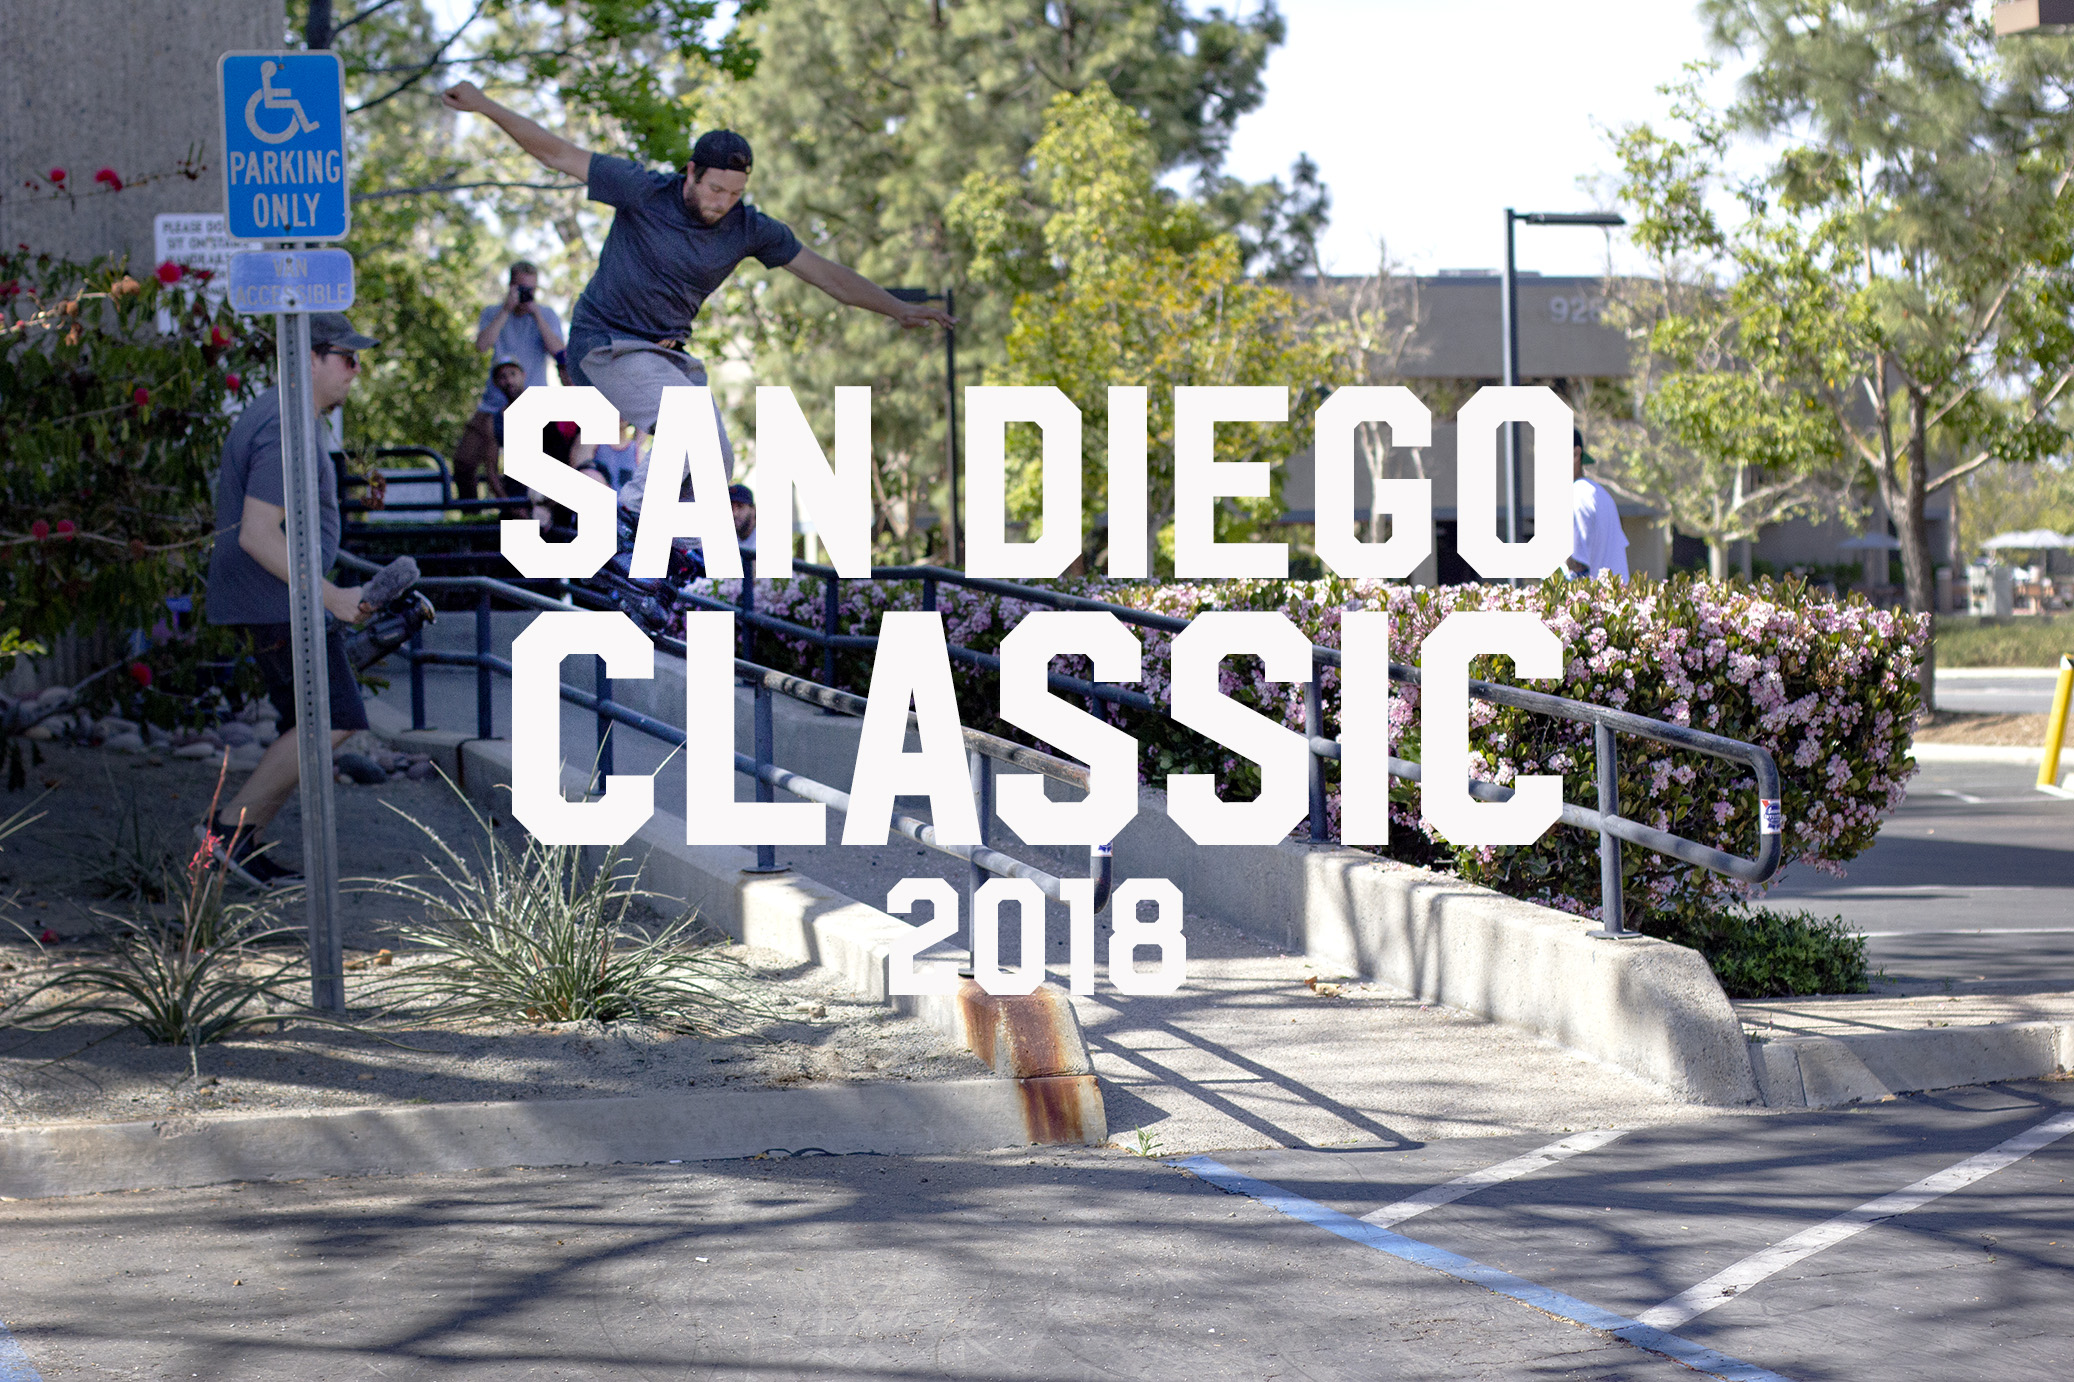 San Diego Classic 2018